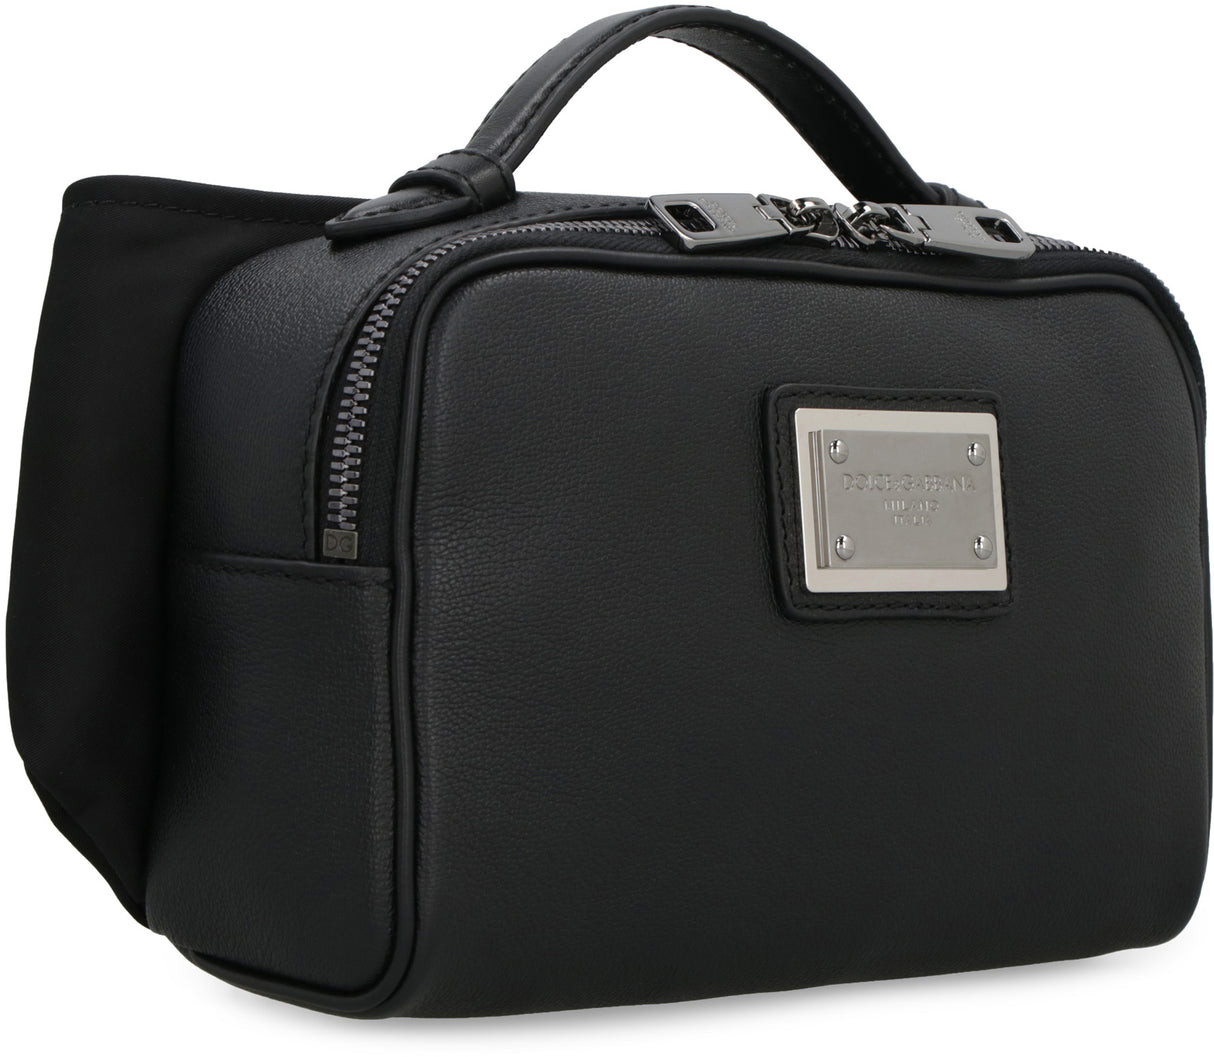 DOLCE & GABBANA Men's Leather Belt Handbag - FW23 Collection